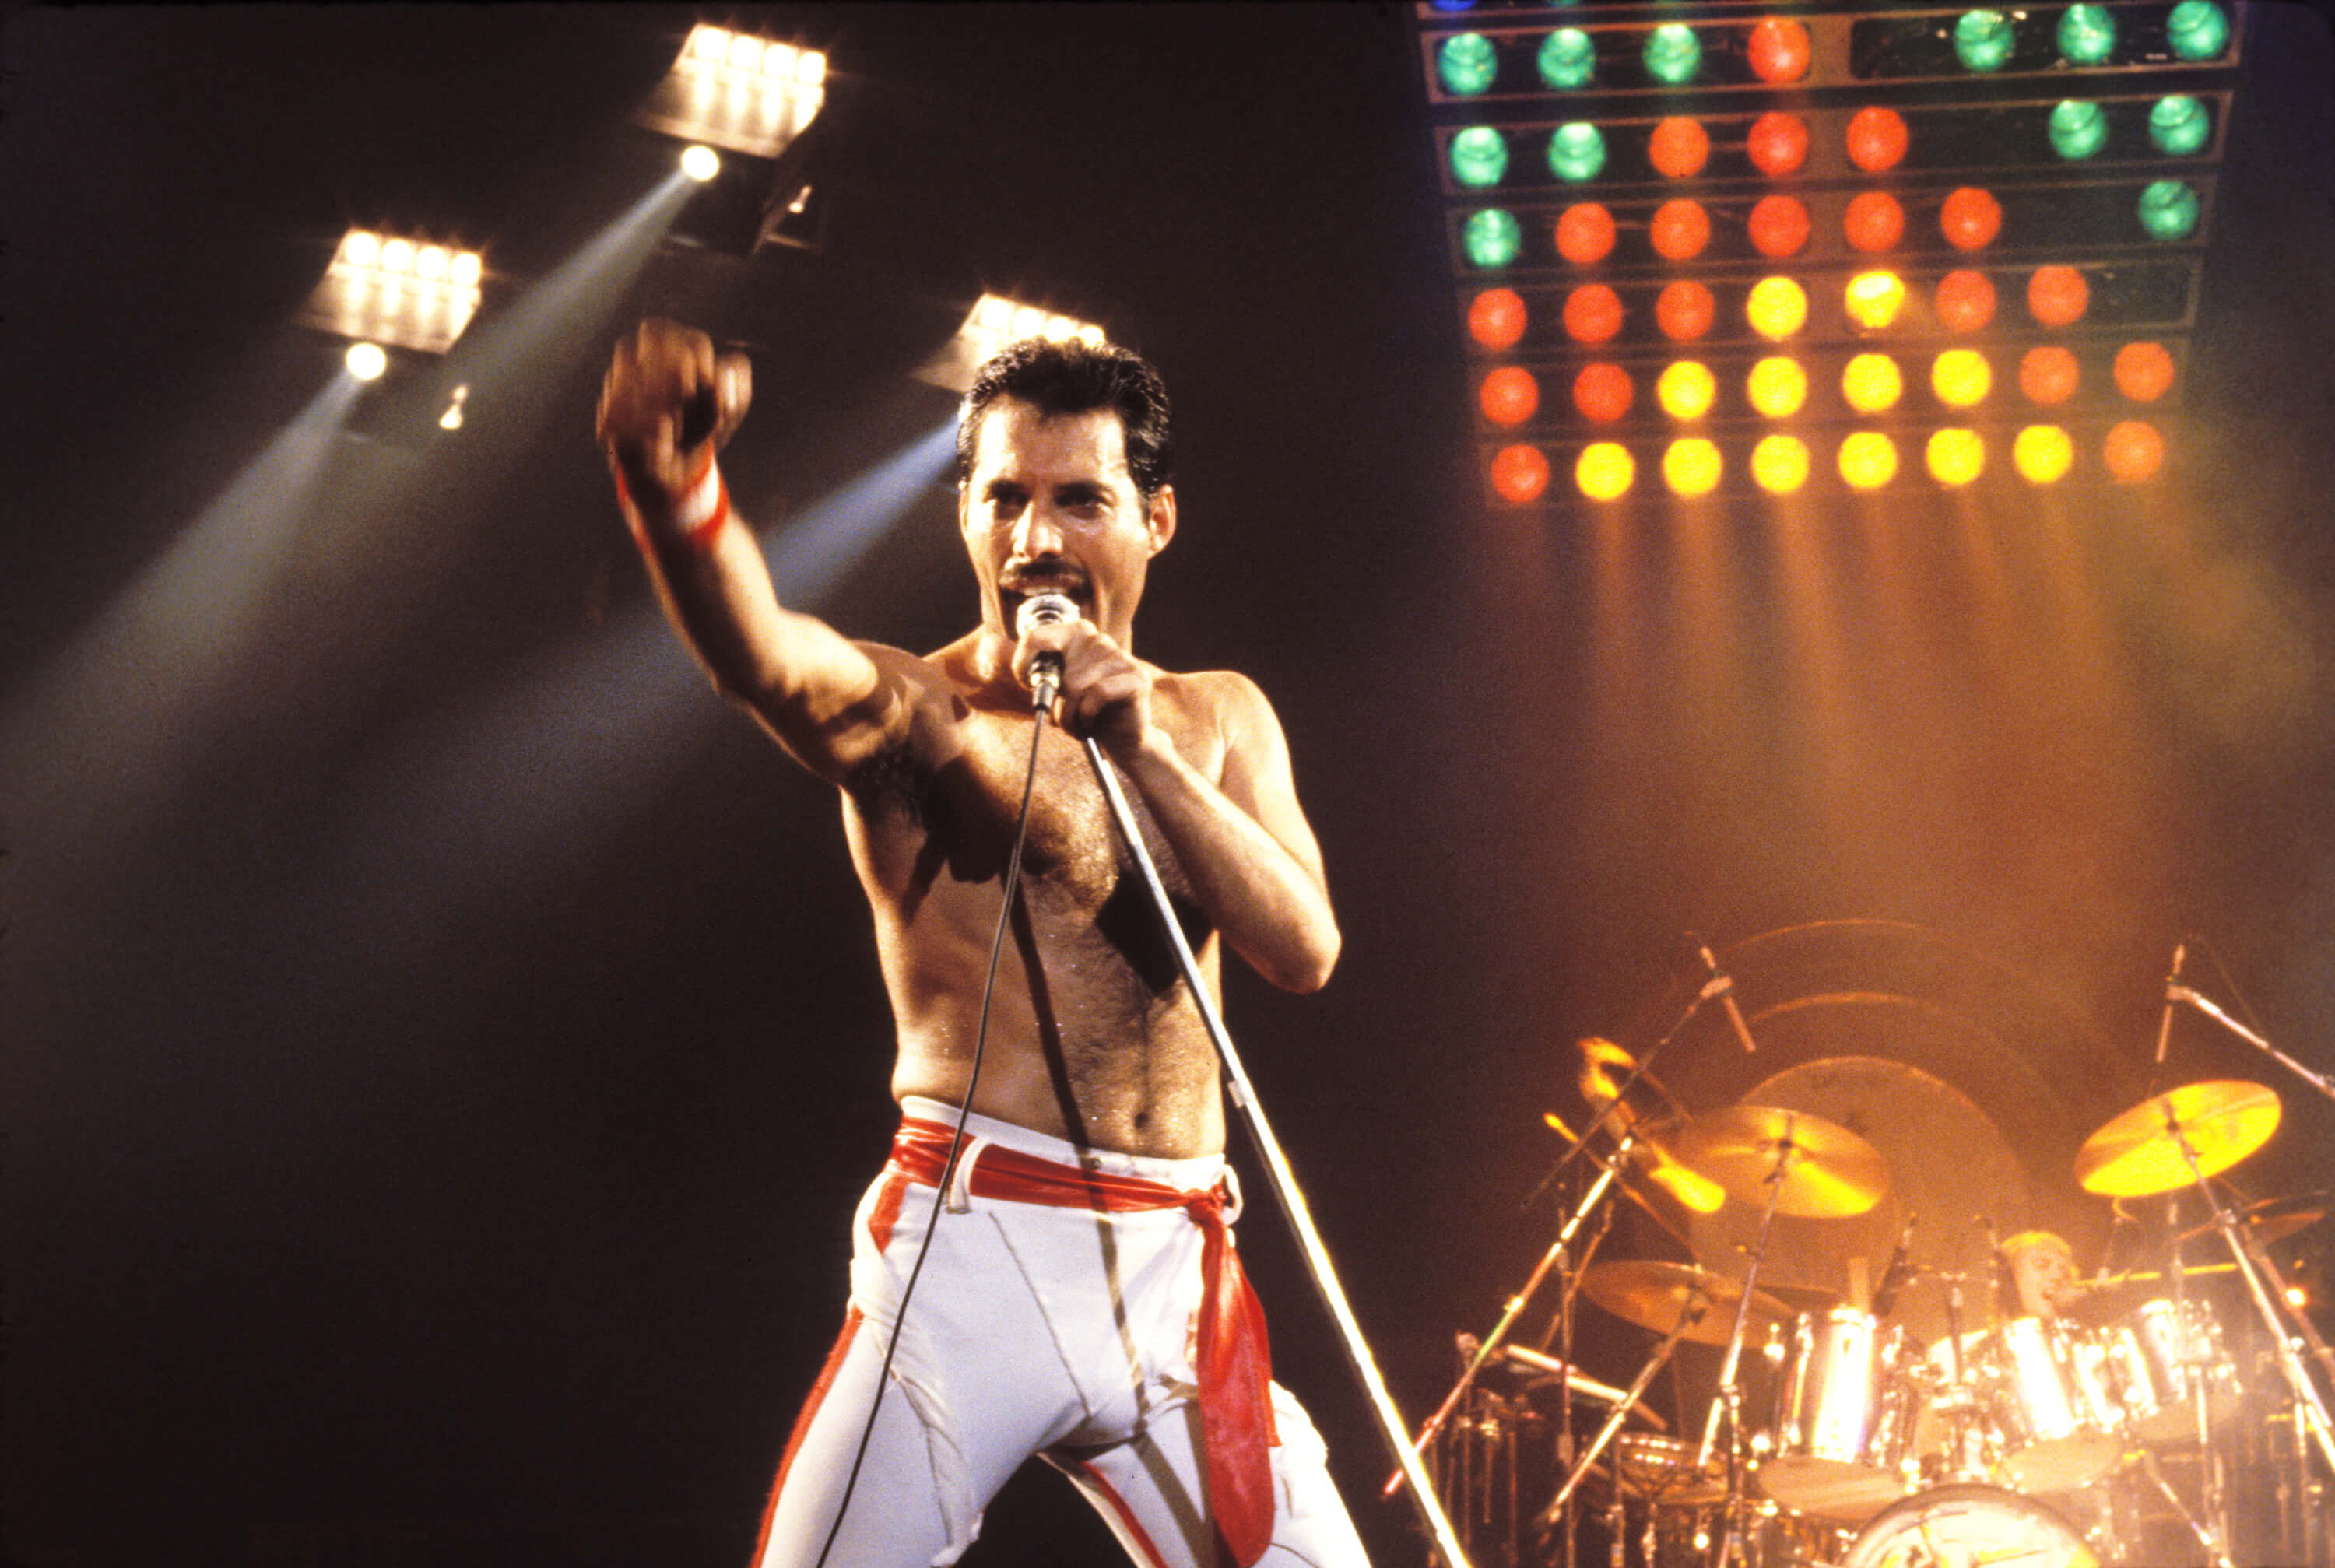 Freddie Mercury, the singer behind many classic rock songs, raising his arm